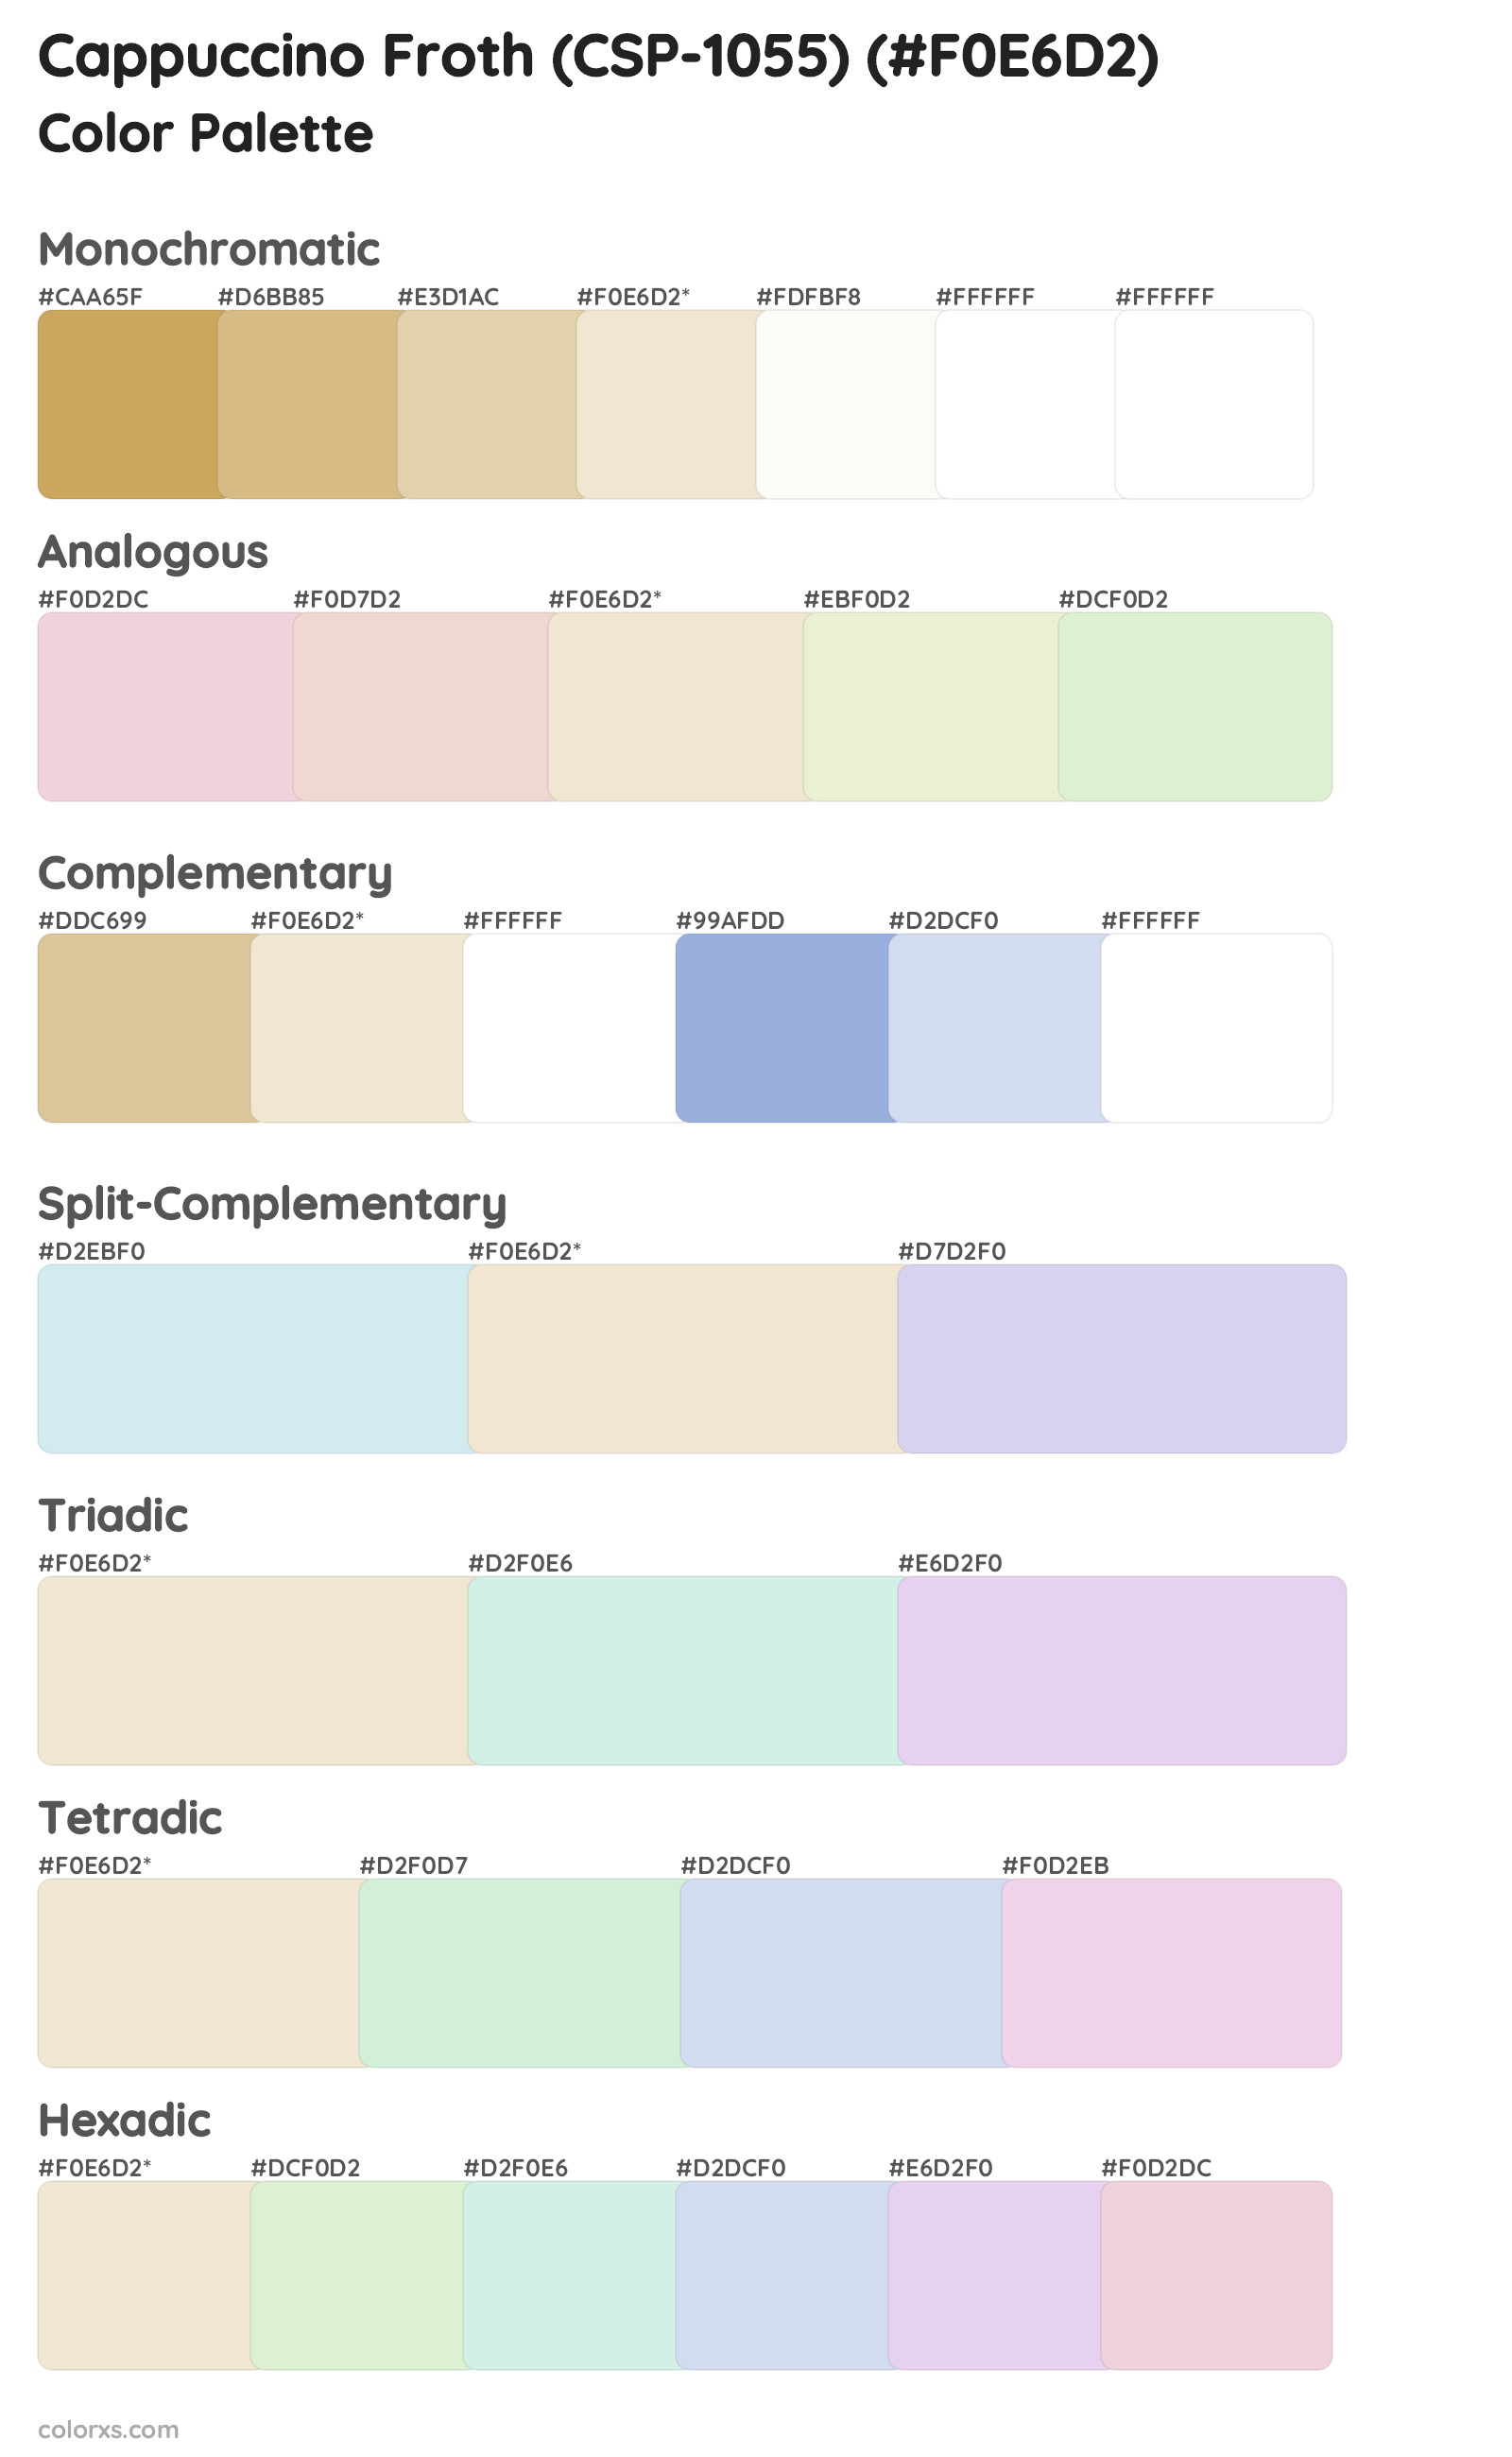 Cappuccino Froth (CSP-1055) Color Scheme Palettes